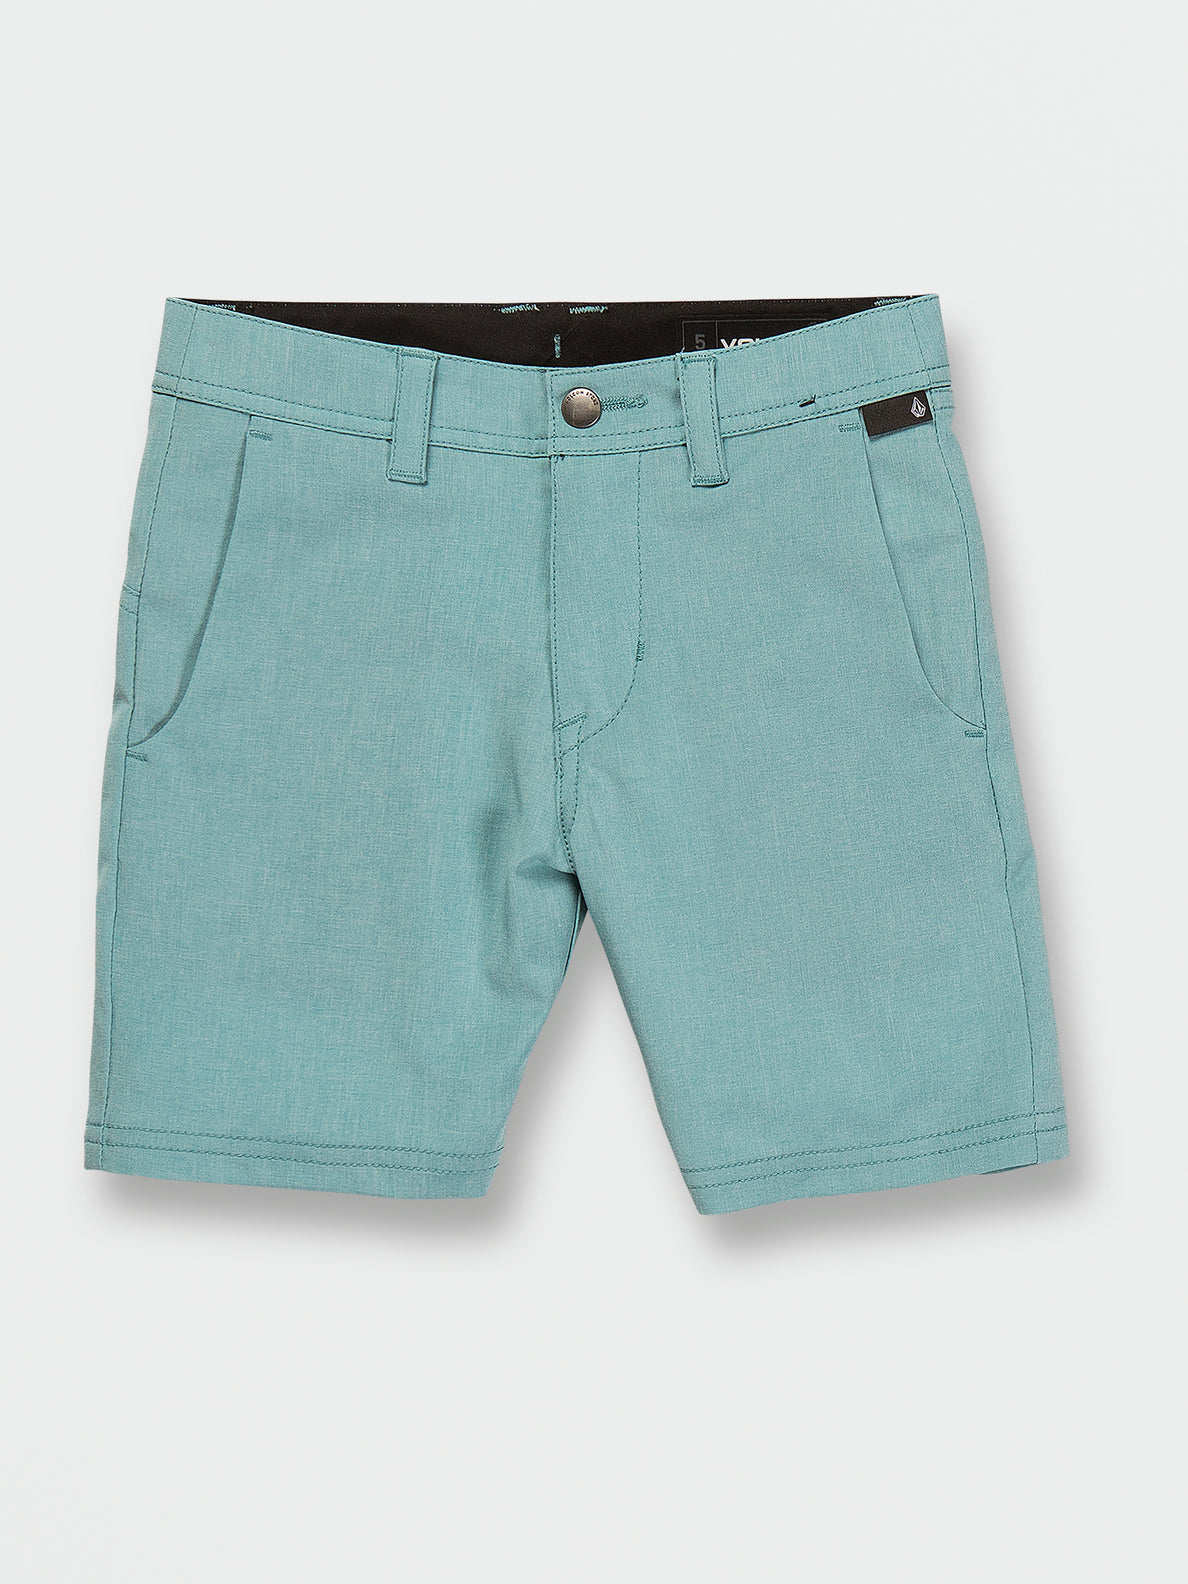 Little Boys Frickin Cross Shred Static Shorts - Cali Blue Heather